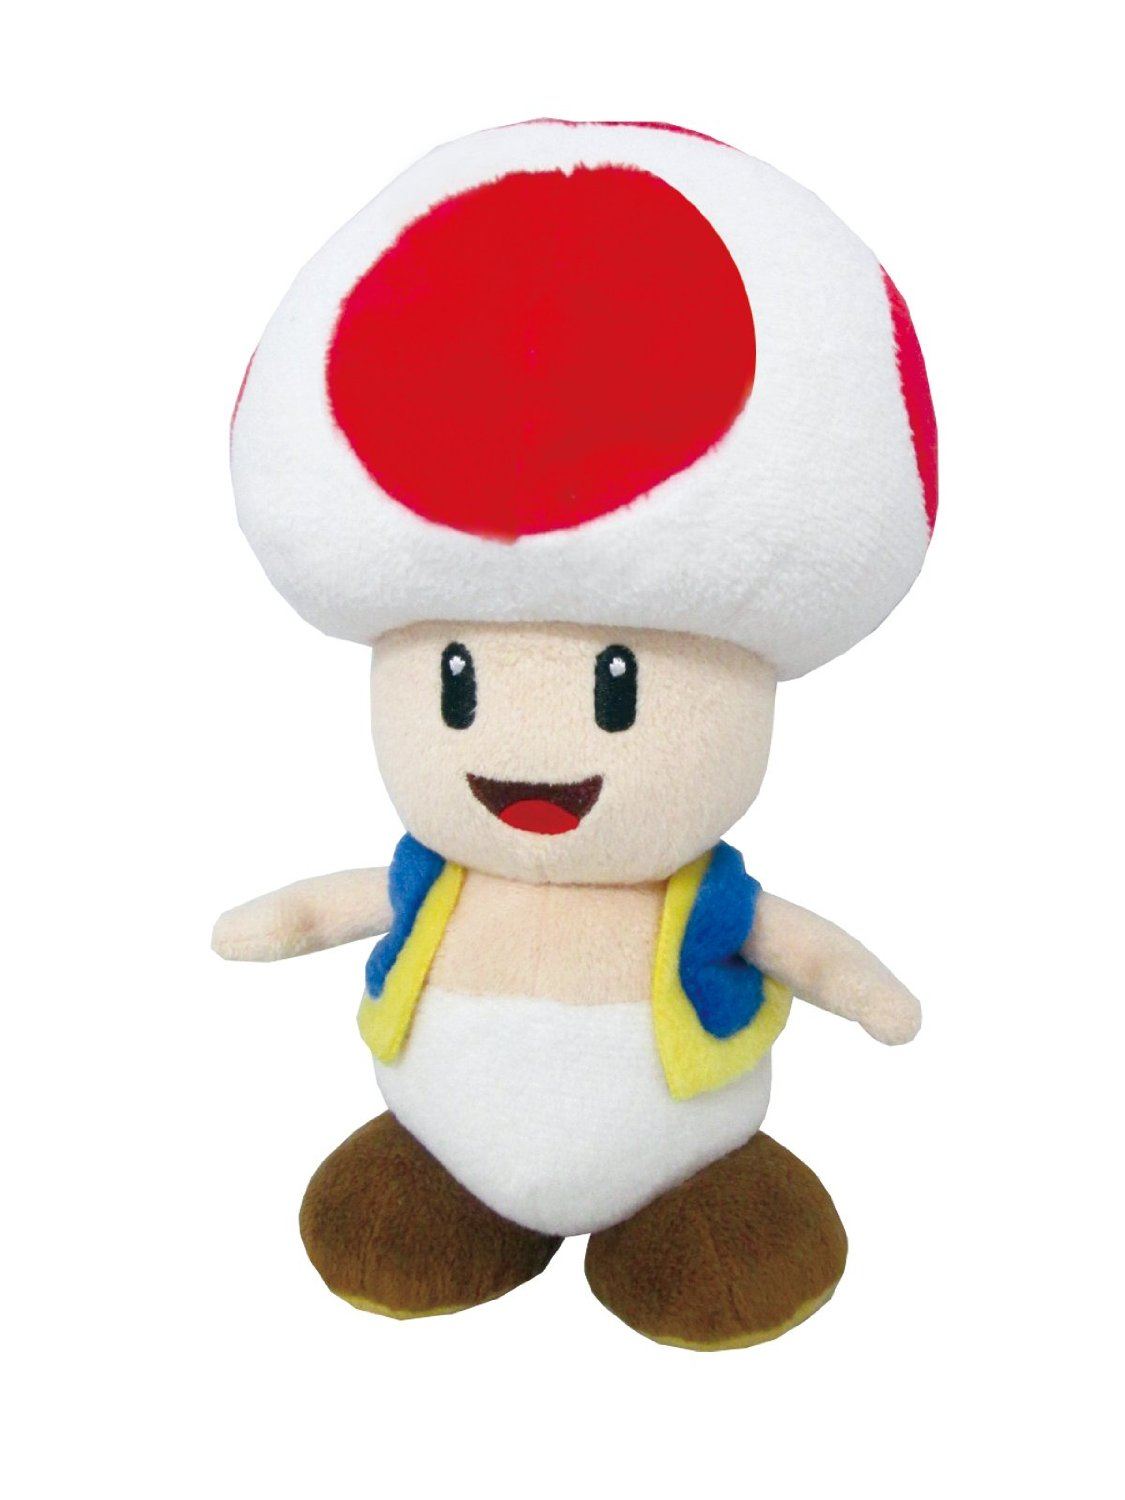 Sanei Super Mario All Star Collection TOAD KINOPIO Plush/Peluche Japan NEW